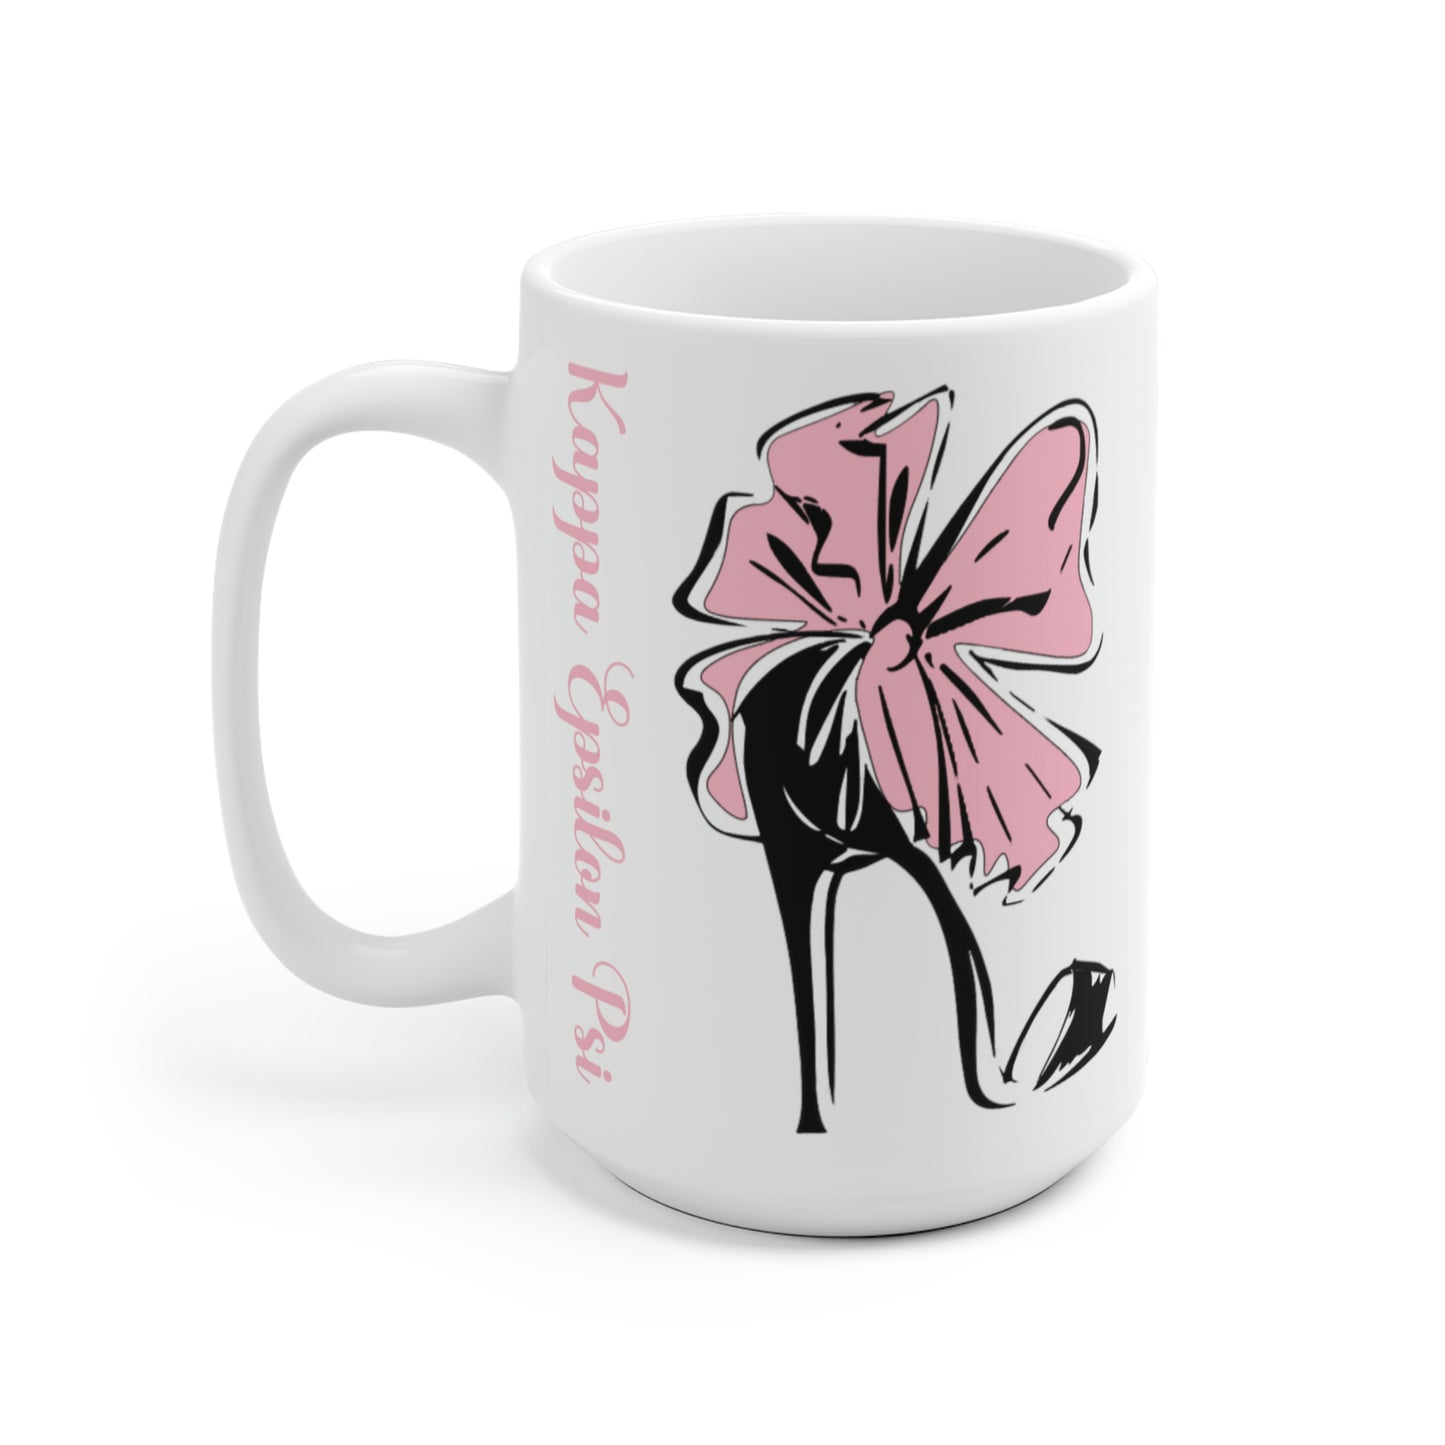 Kappa Epsilon Psi (High Heel) Ceramic Mug (Pink)